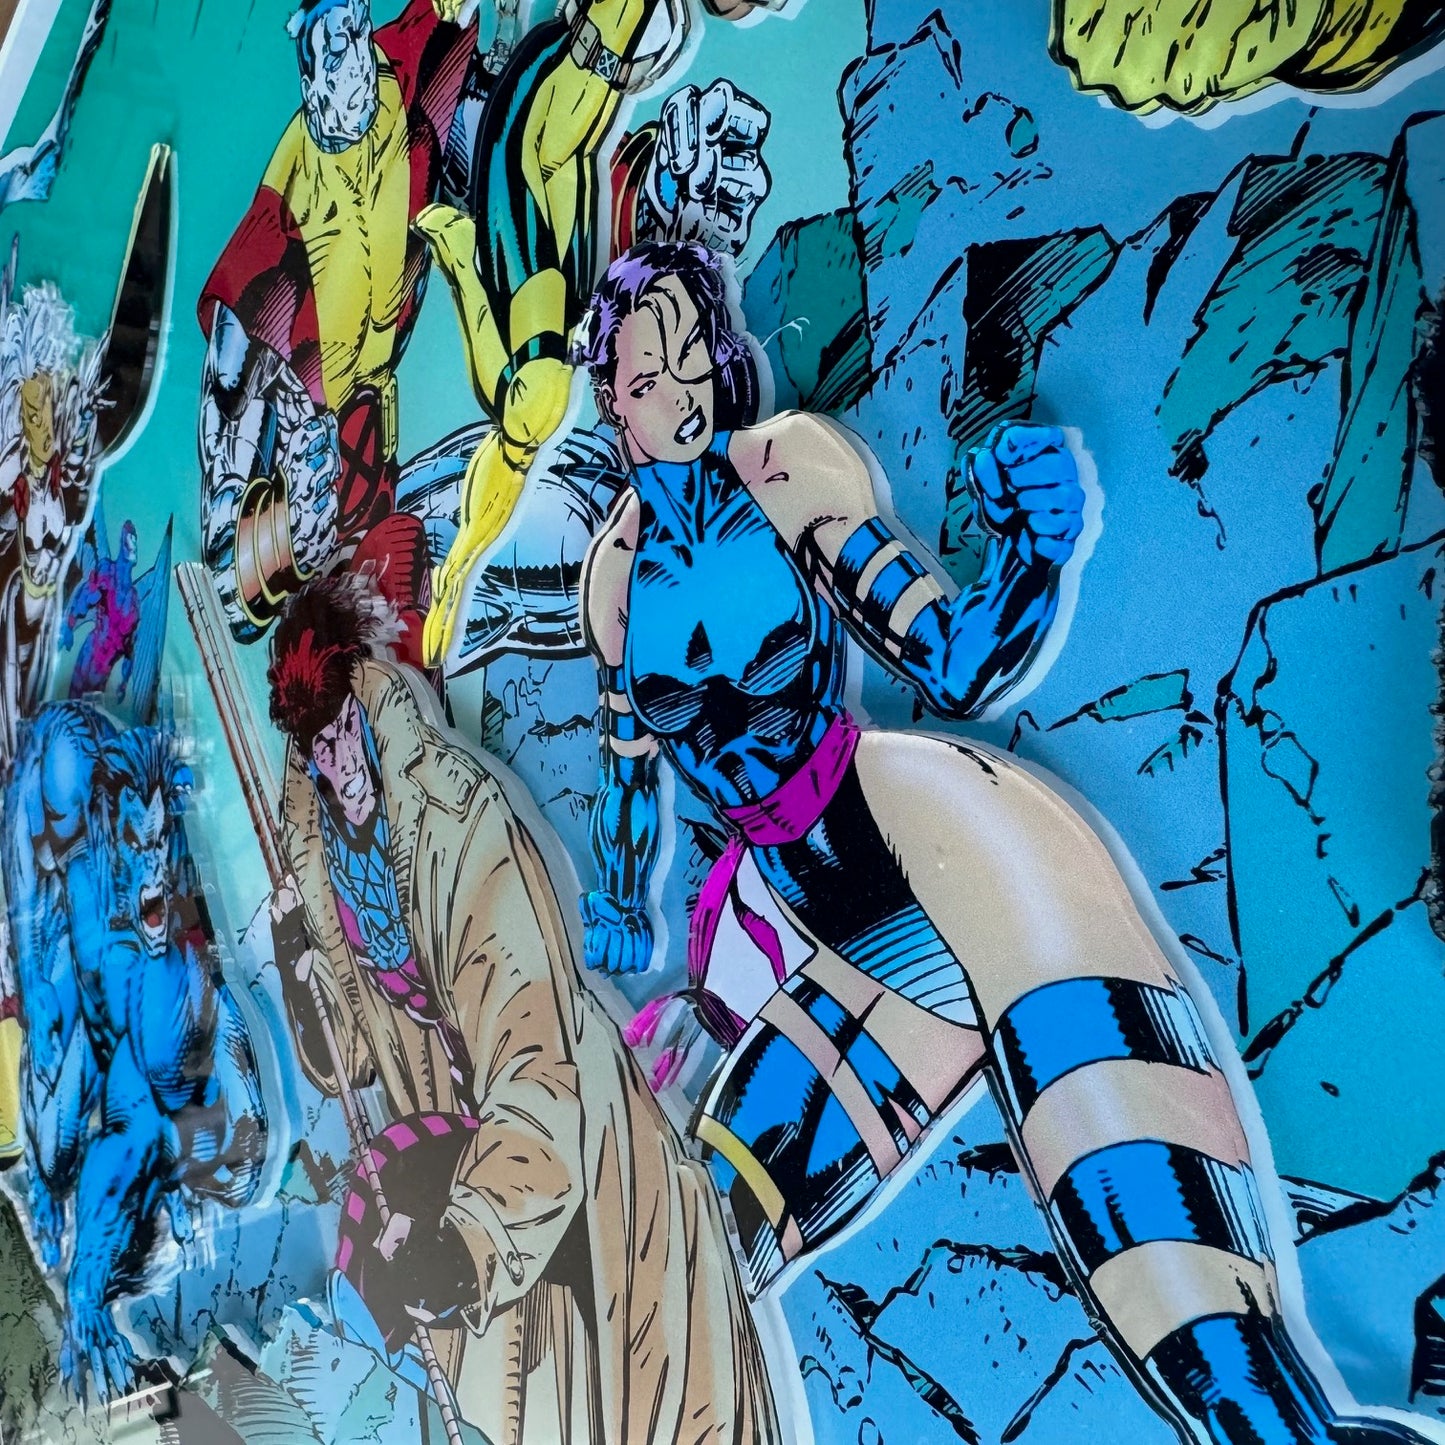 Jim Lee "X-Men #1" Multi-Layer Acrylic Panel